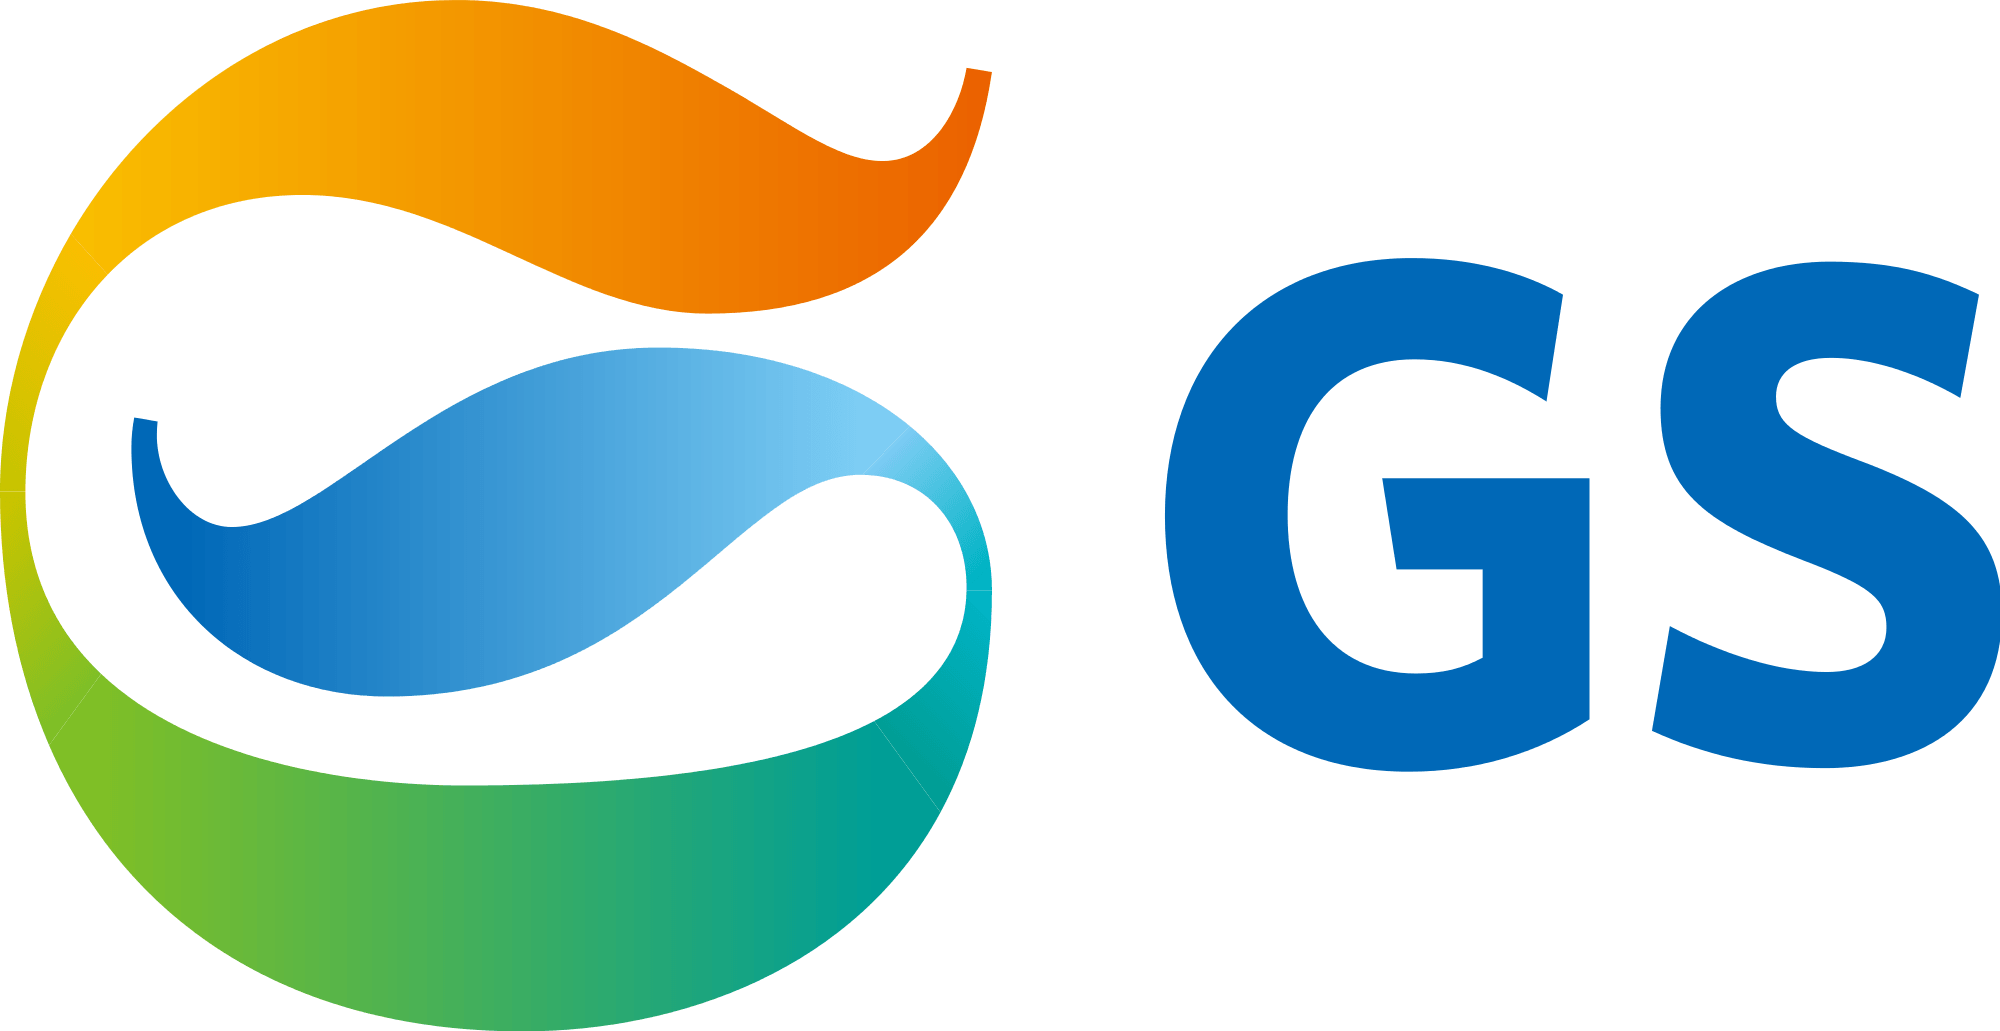 South Korean Company Logo - File:GS logo (South Korean company).svg - Wikimedia Commons